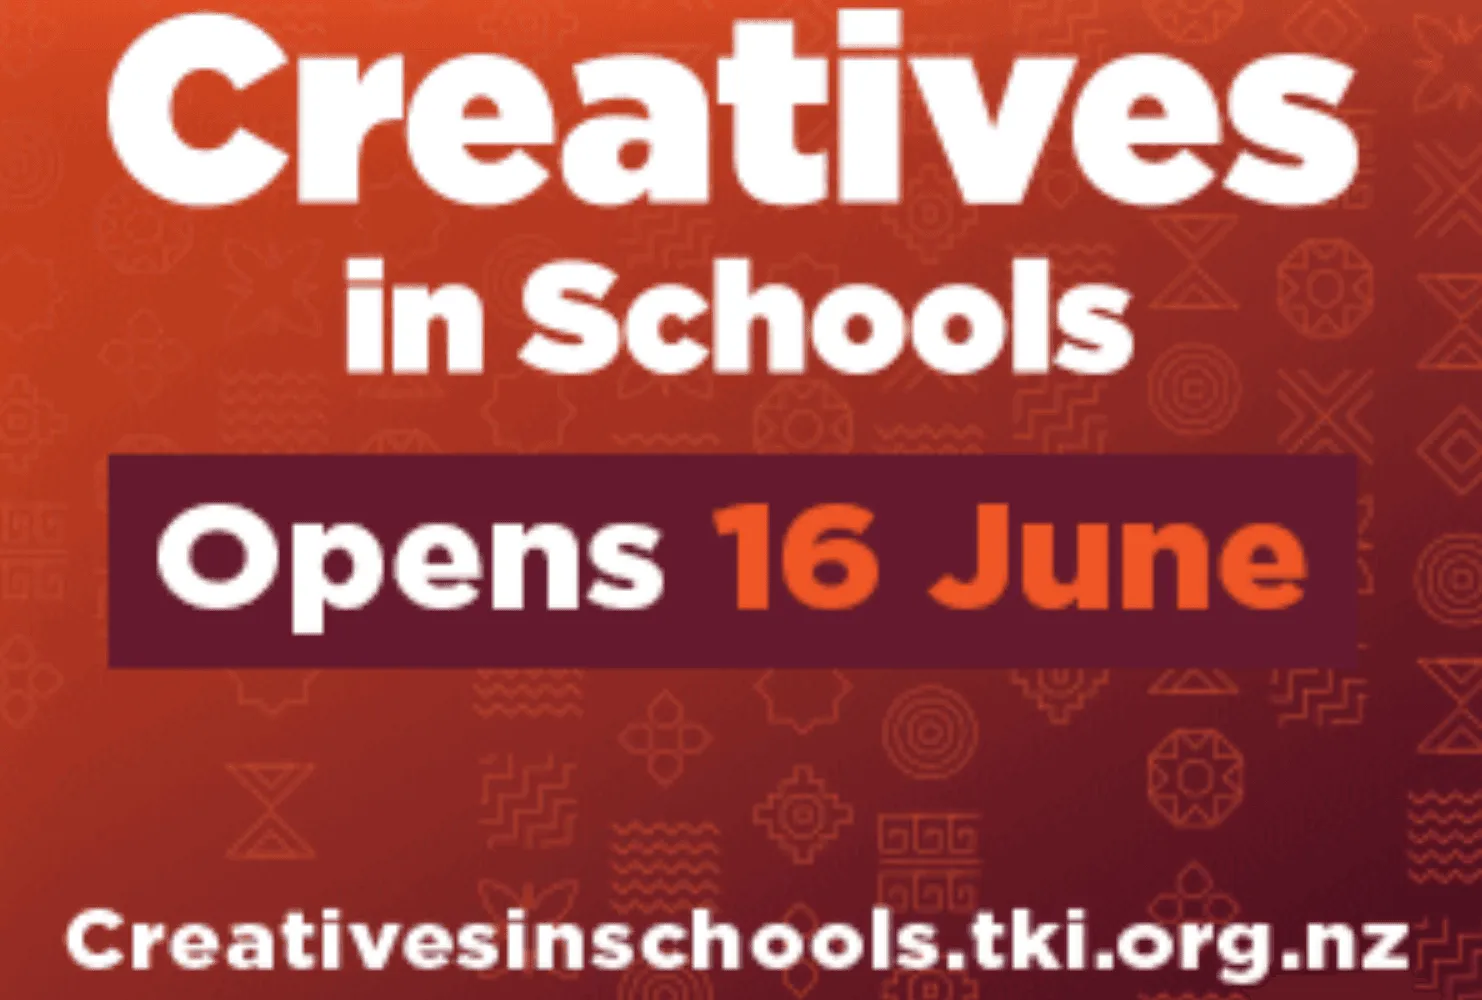 Creatives in Schools Round 5 opens 16 June